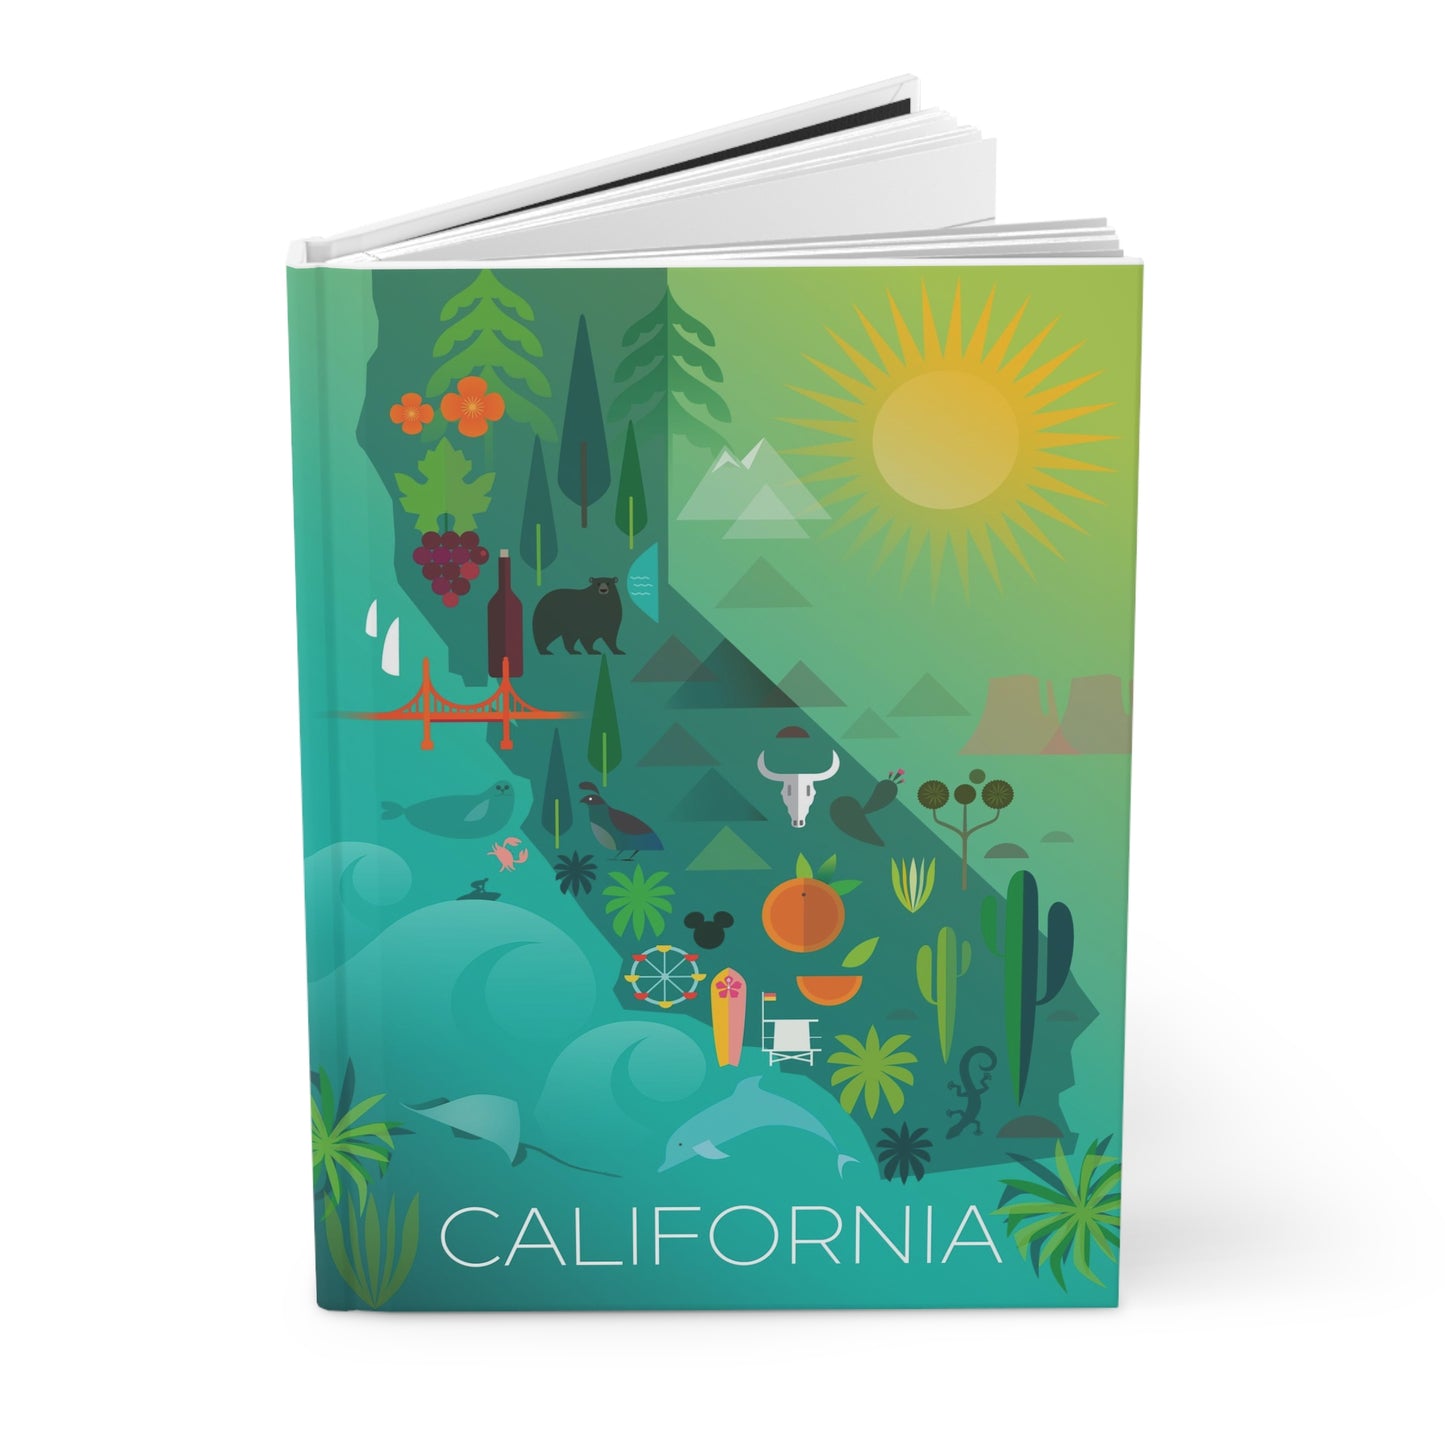 California Hardcover Journal